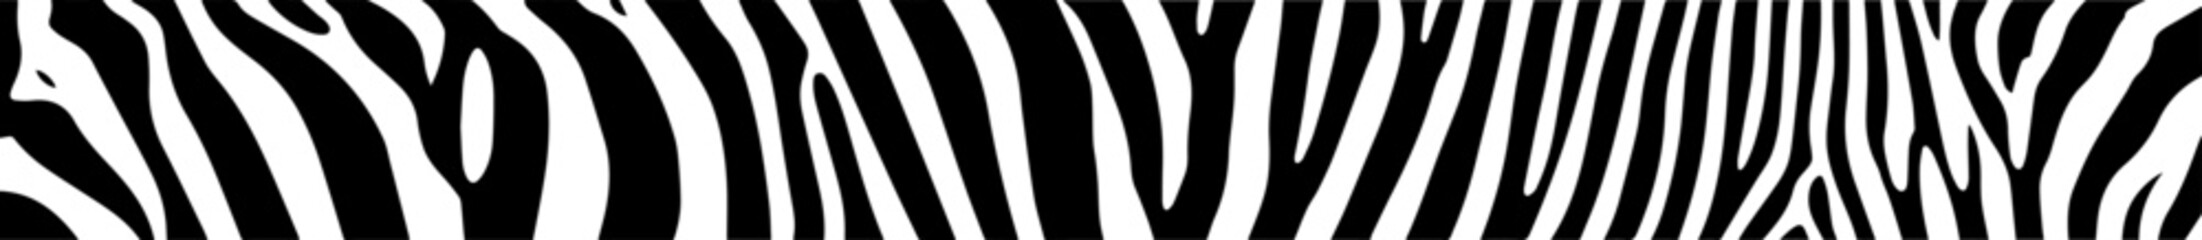 Canvas Print - zebra stripes black pattern silhouette overlay vector, shape print, monochrome clipart illustration, laser cutting engraving nocolor